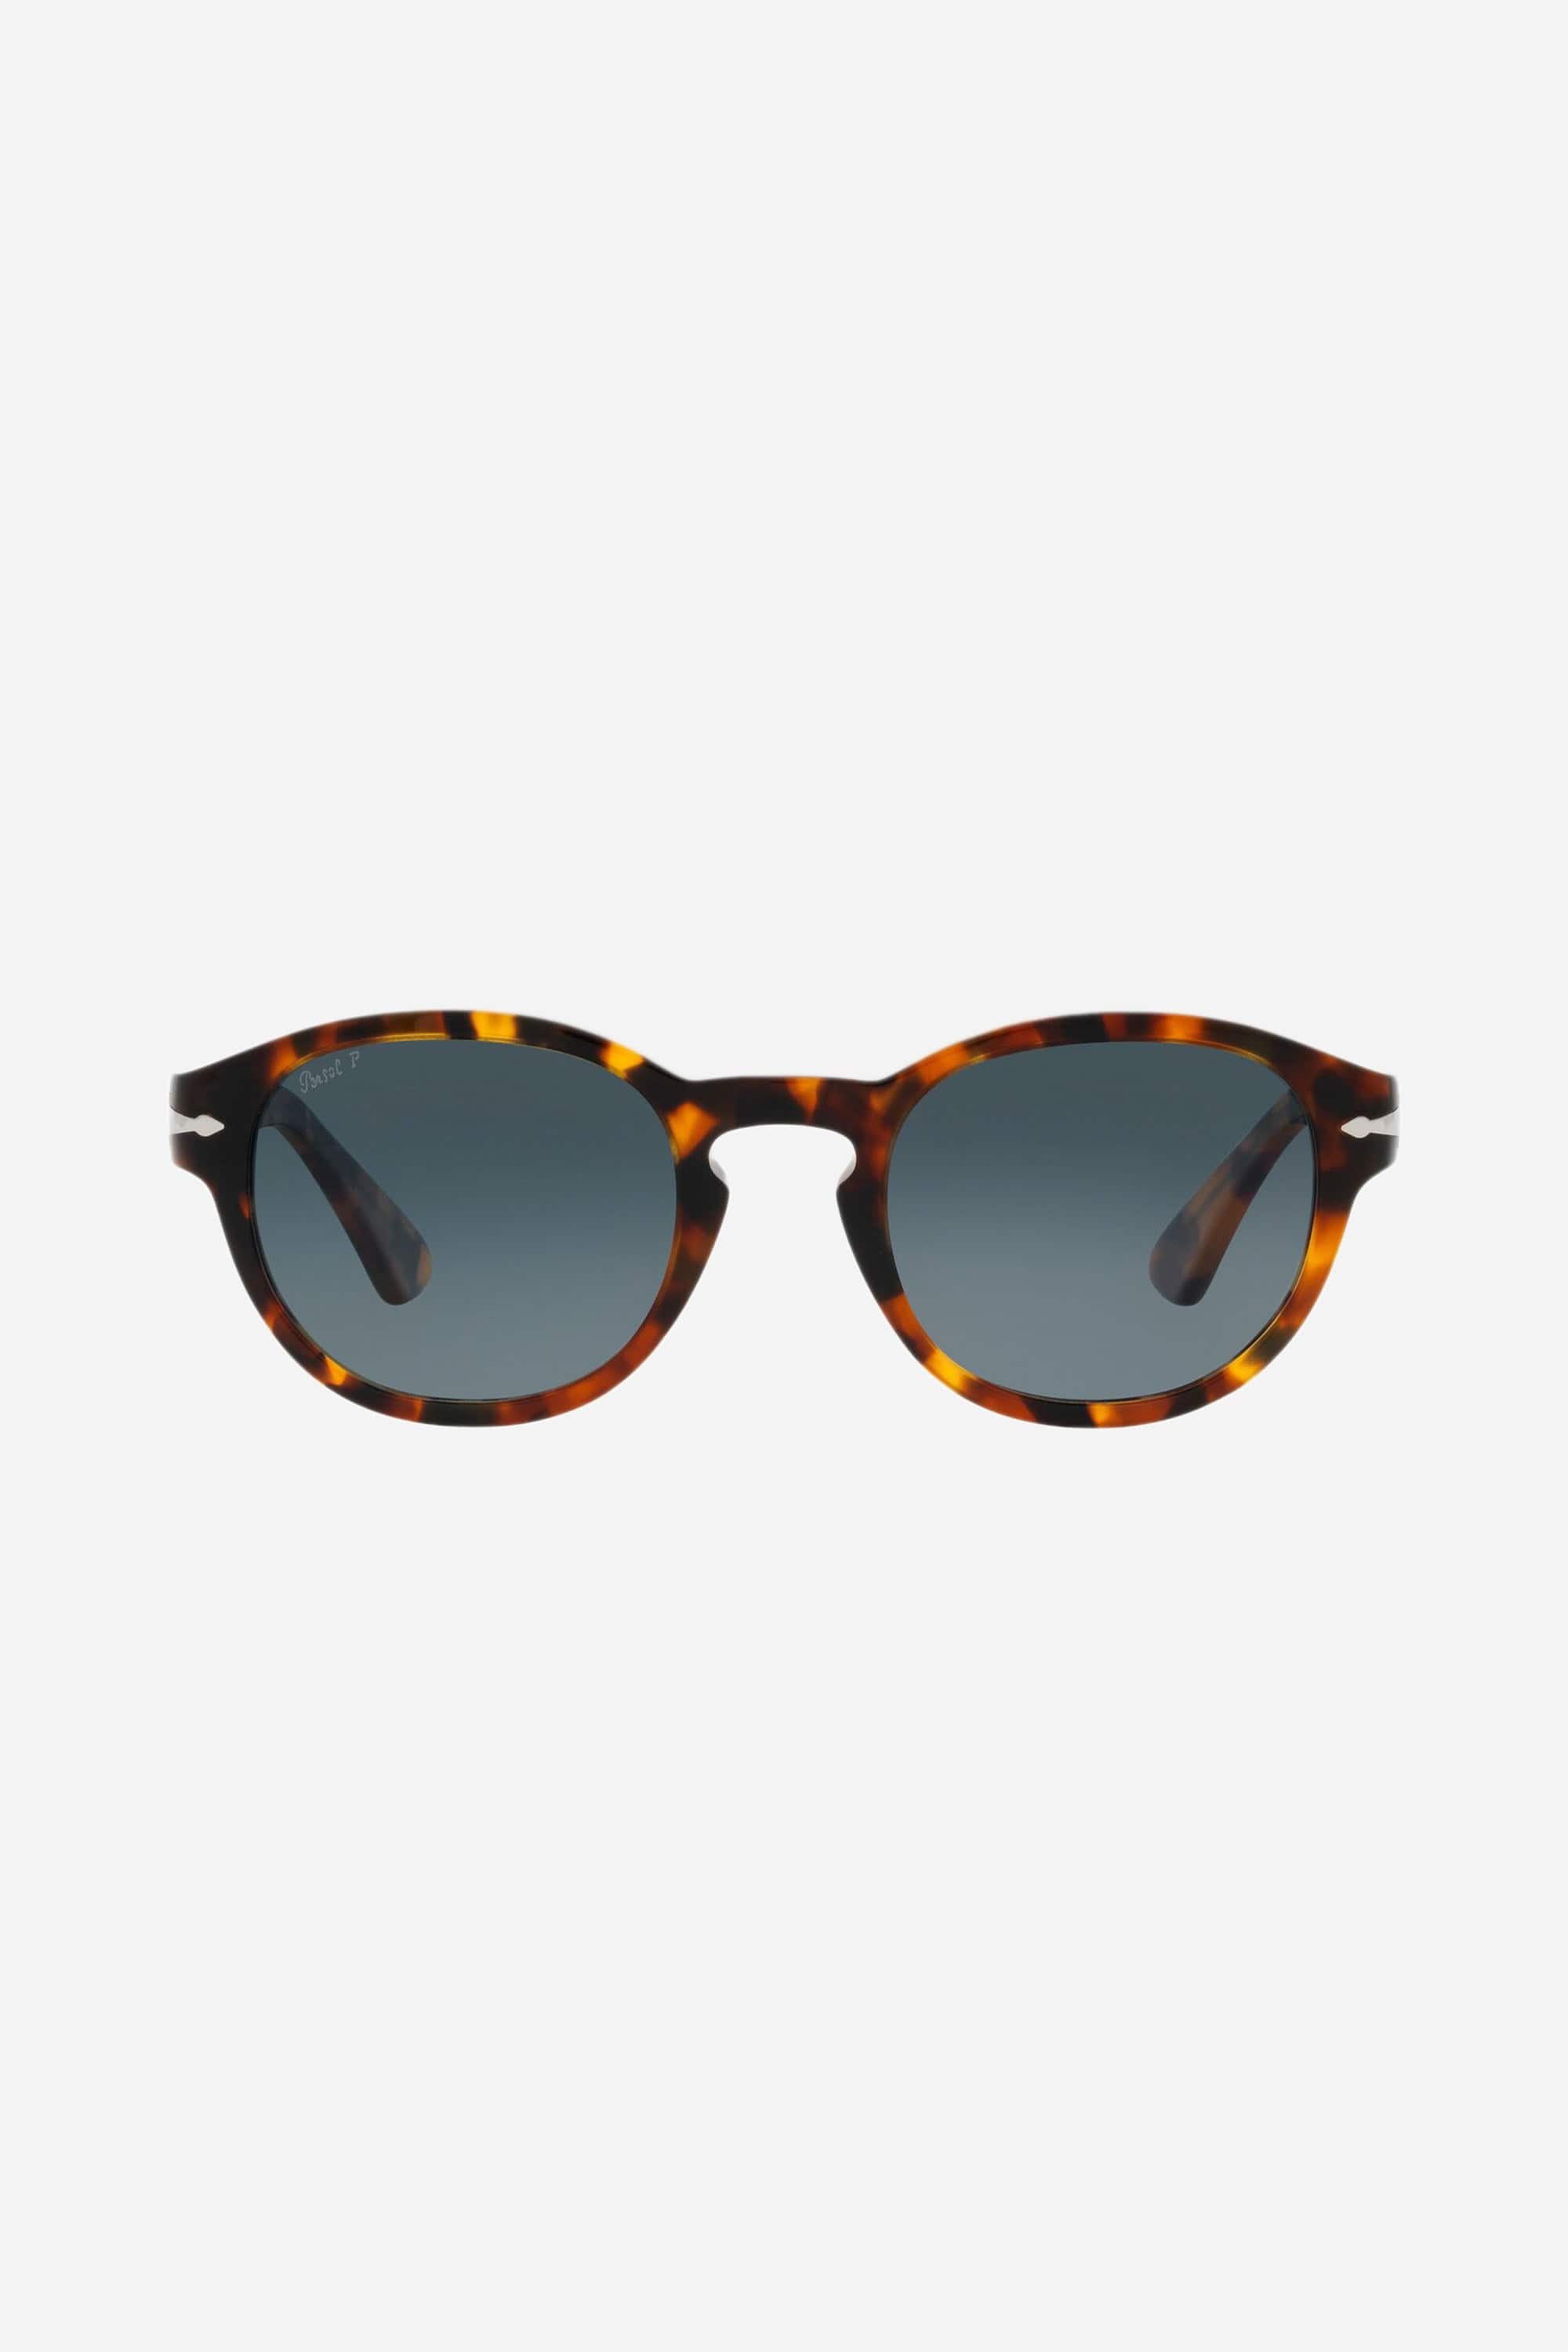 Persol round classic havana sunglasses - Eyewear Club